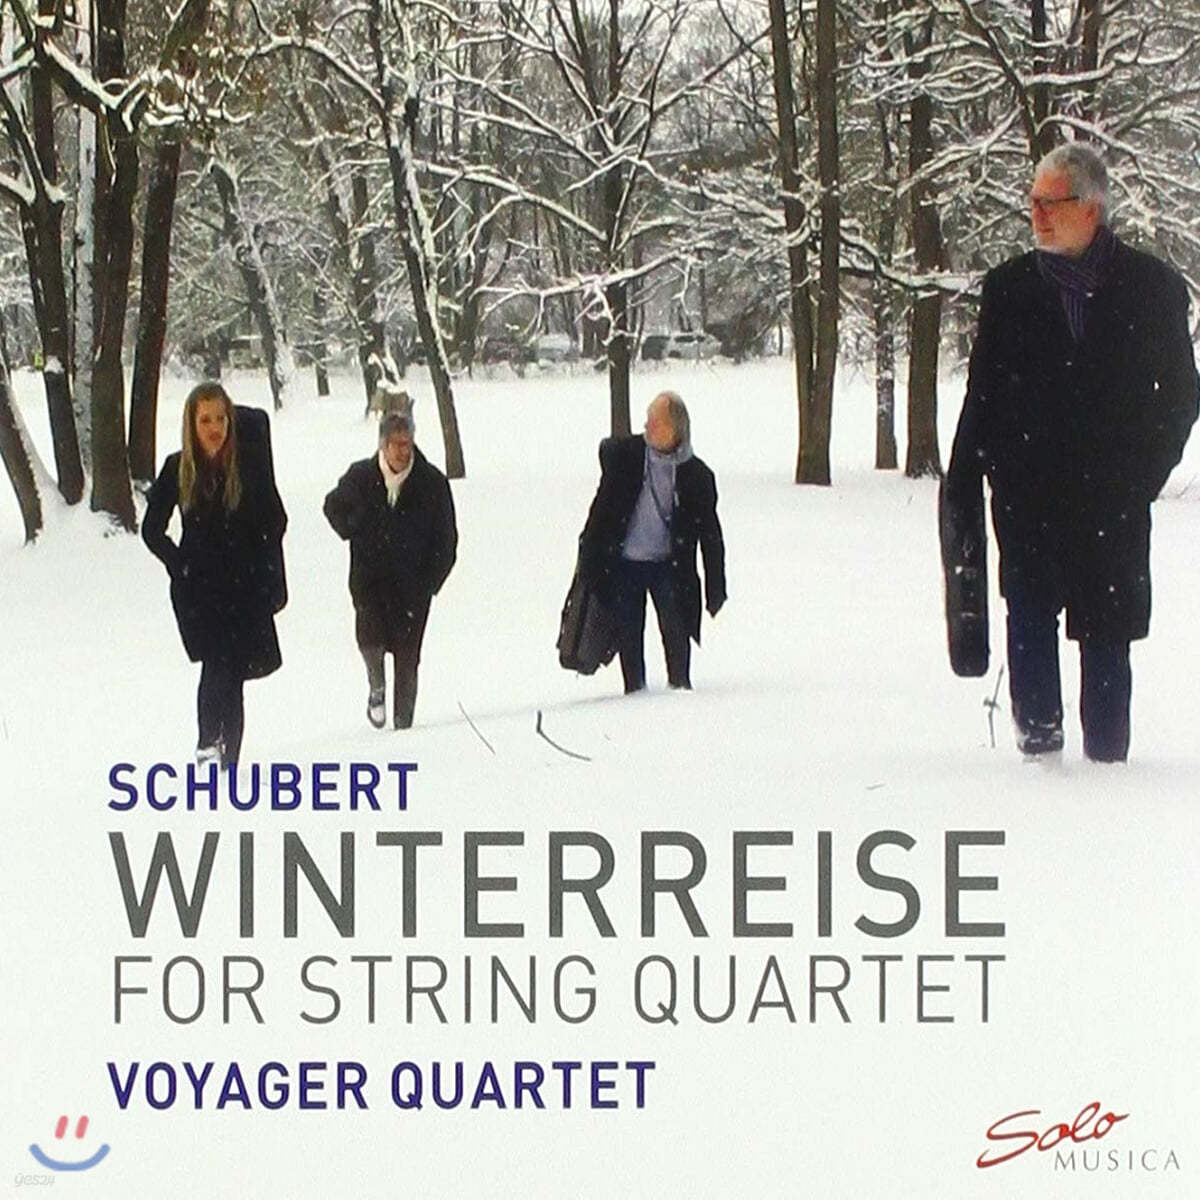 Voyager Quartet 슈베르트: 현악사중주로 편곡한 겨울 나그네 (Schubert: Winterreise for String Quartet)